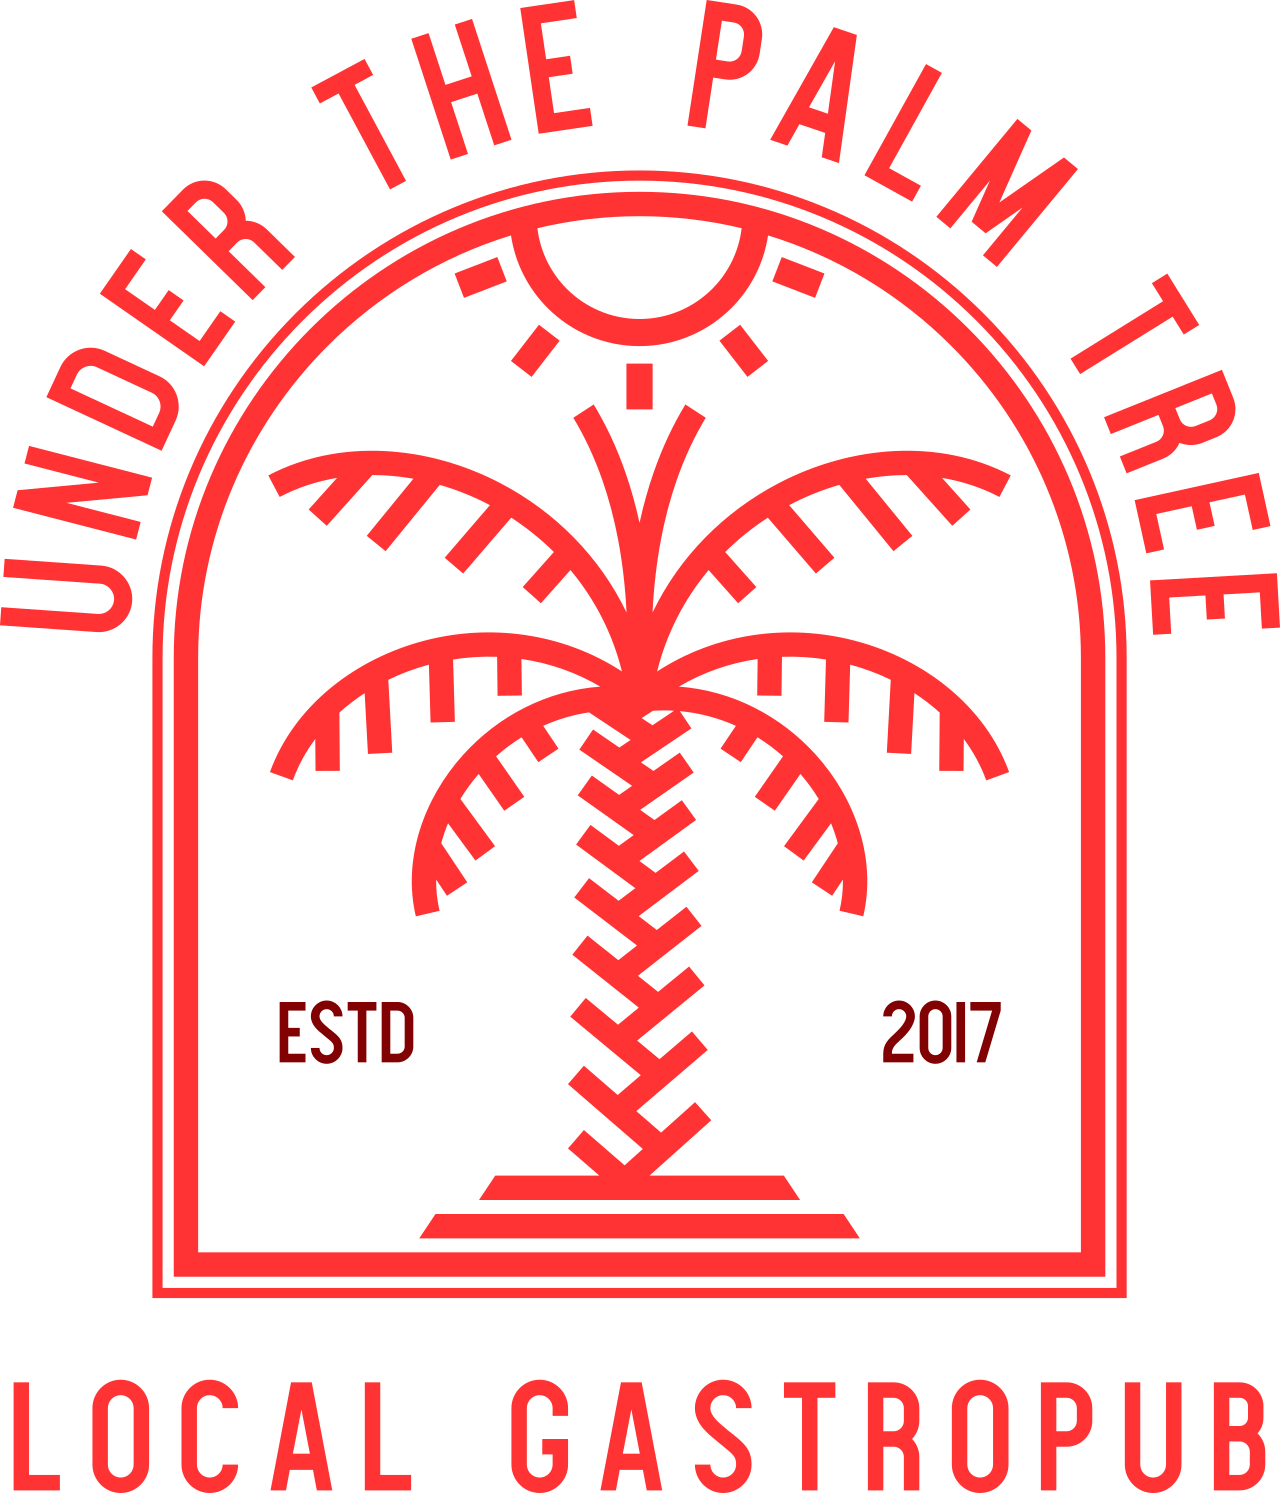 UNDER THE PALM TREE's logo